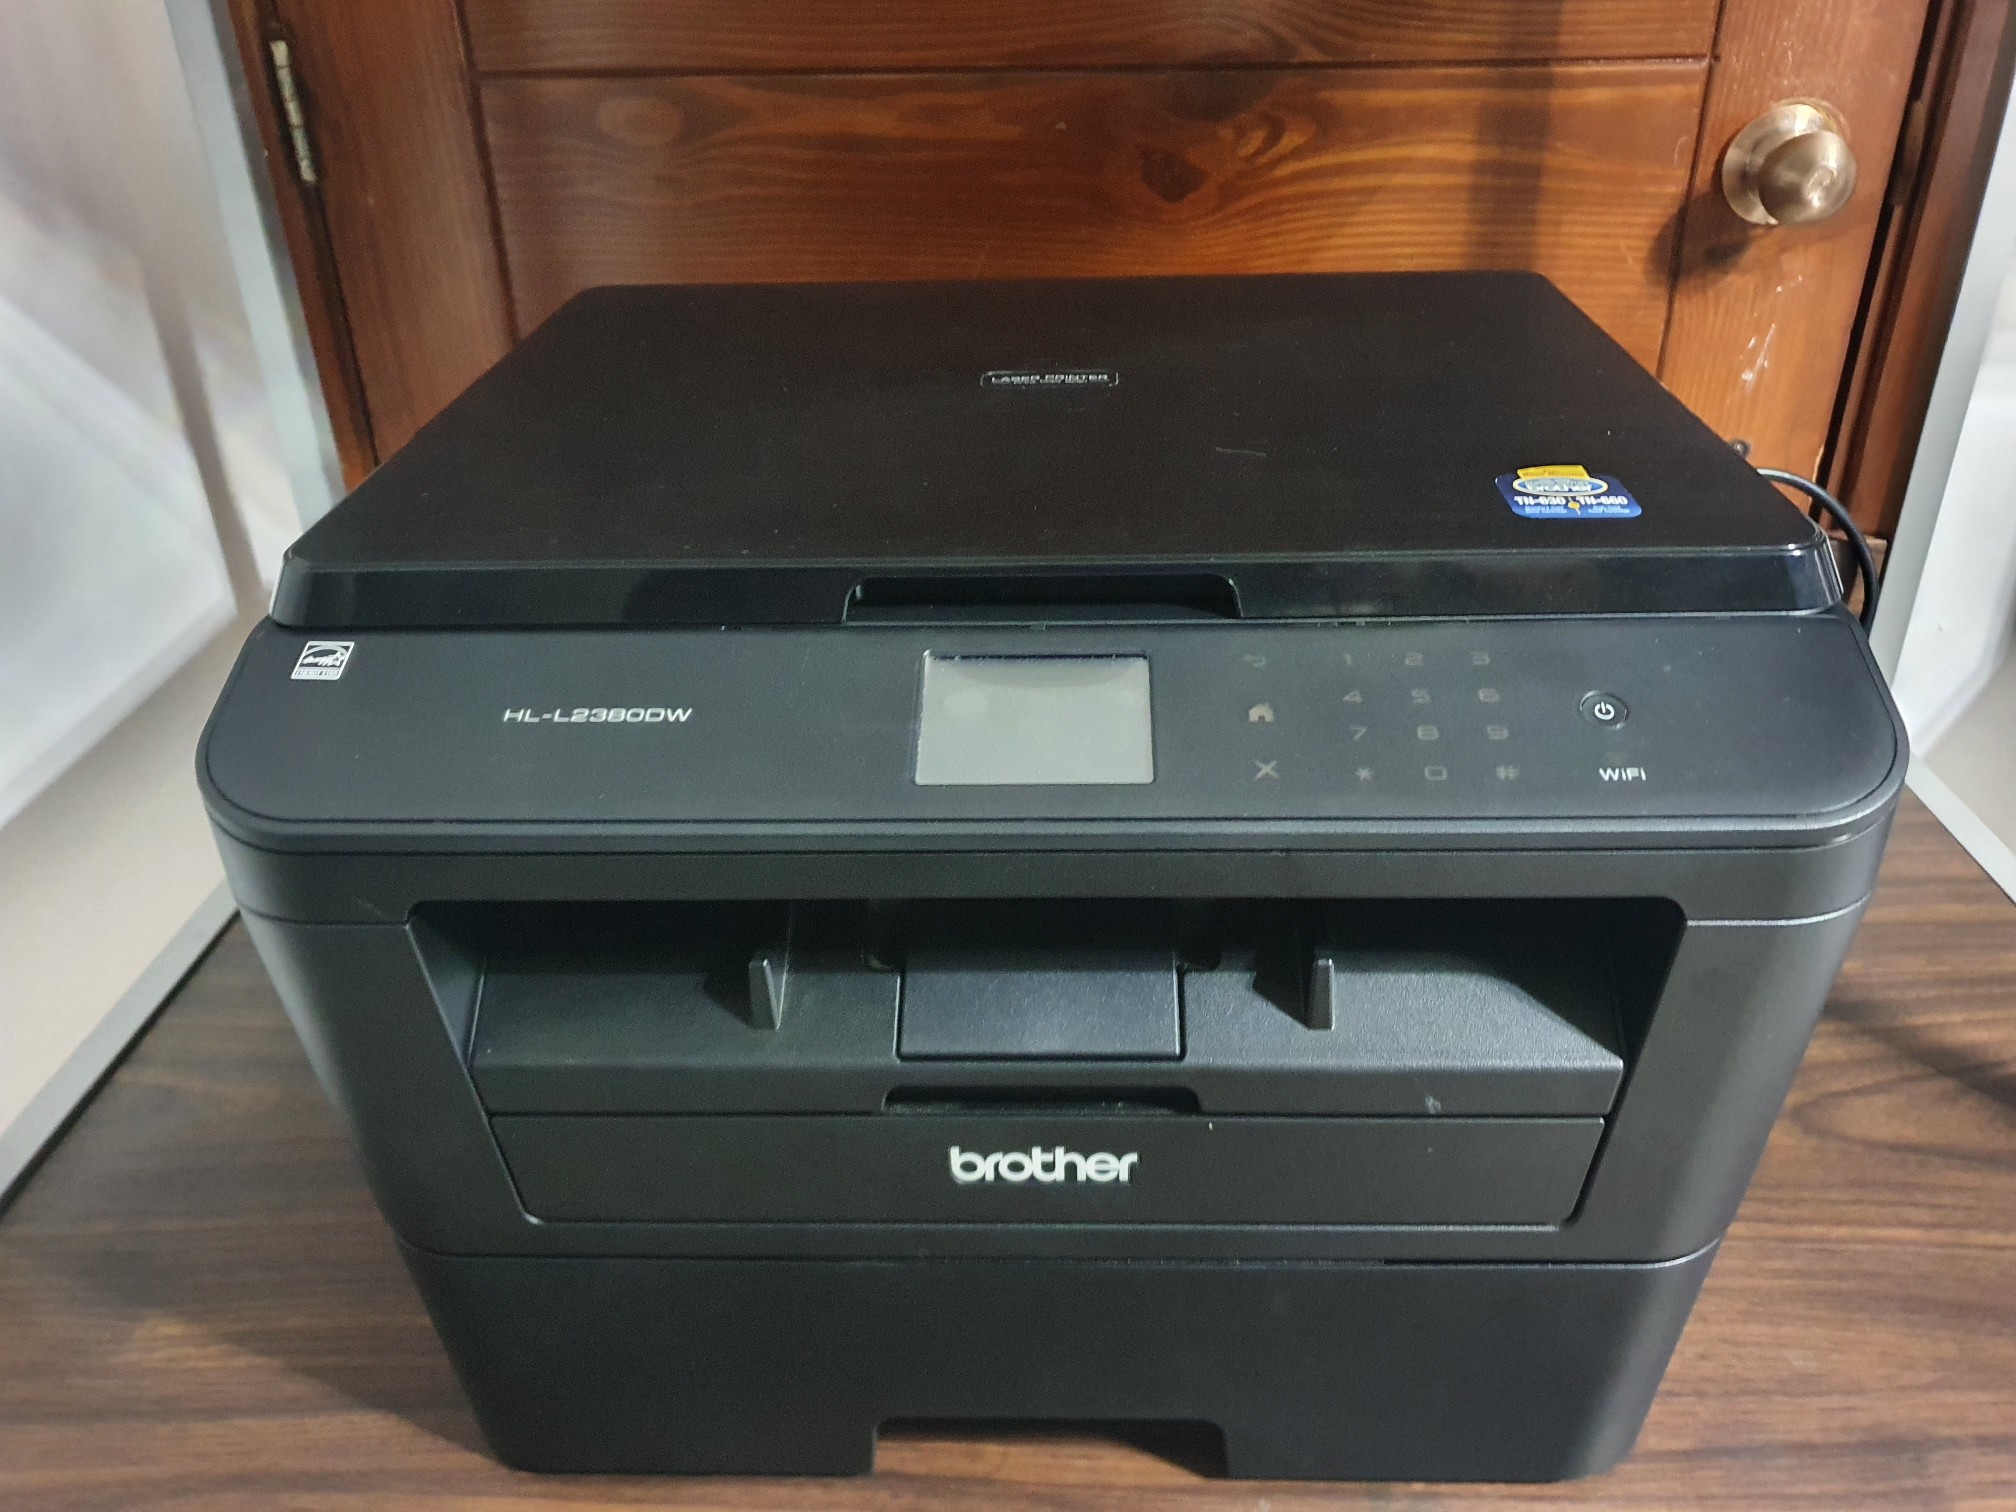 impresoras y scanners - Impresora Brother